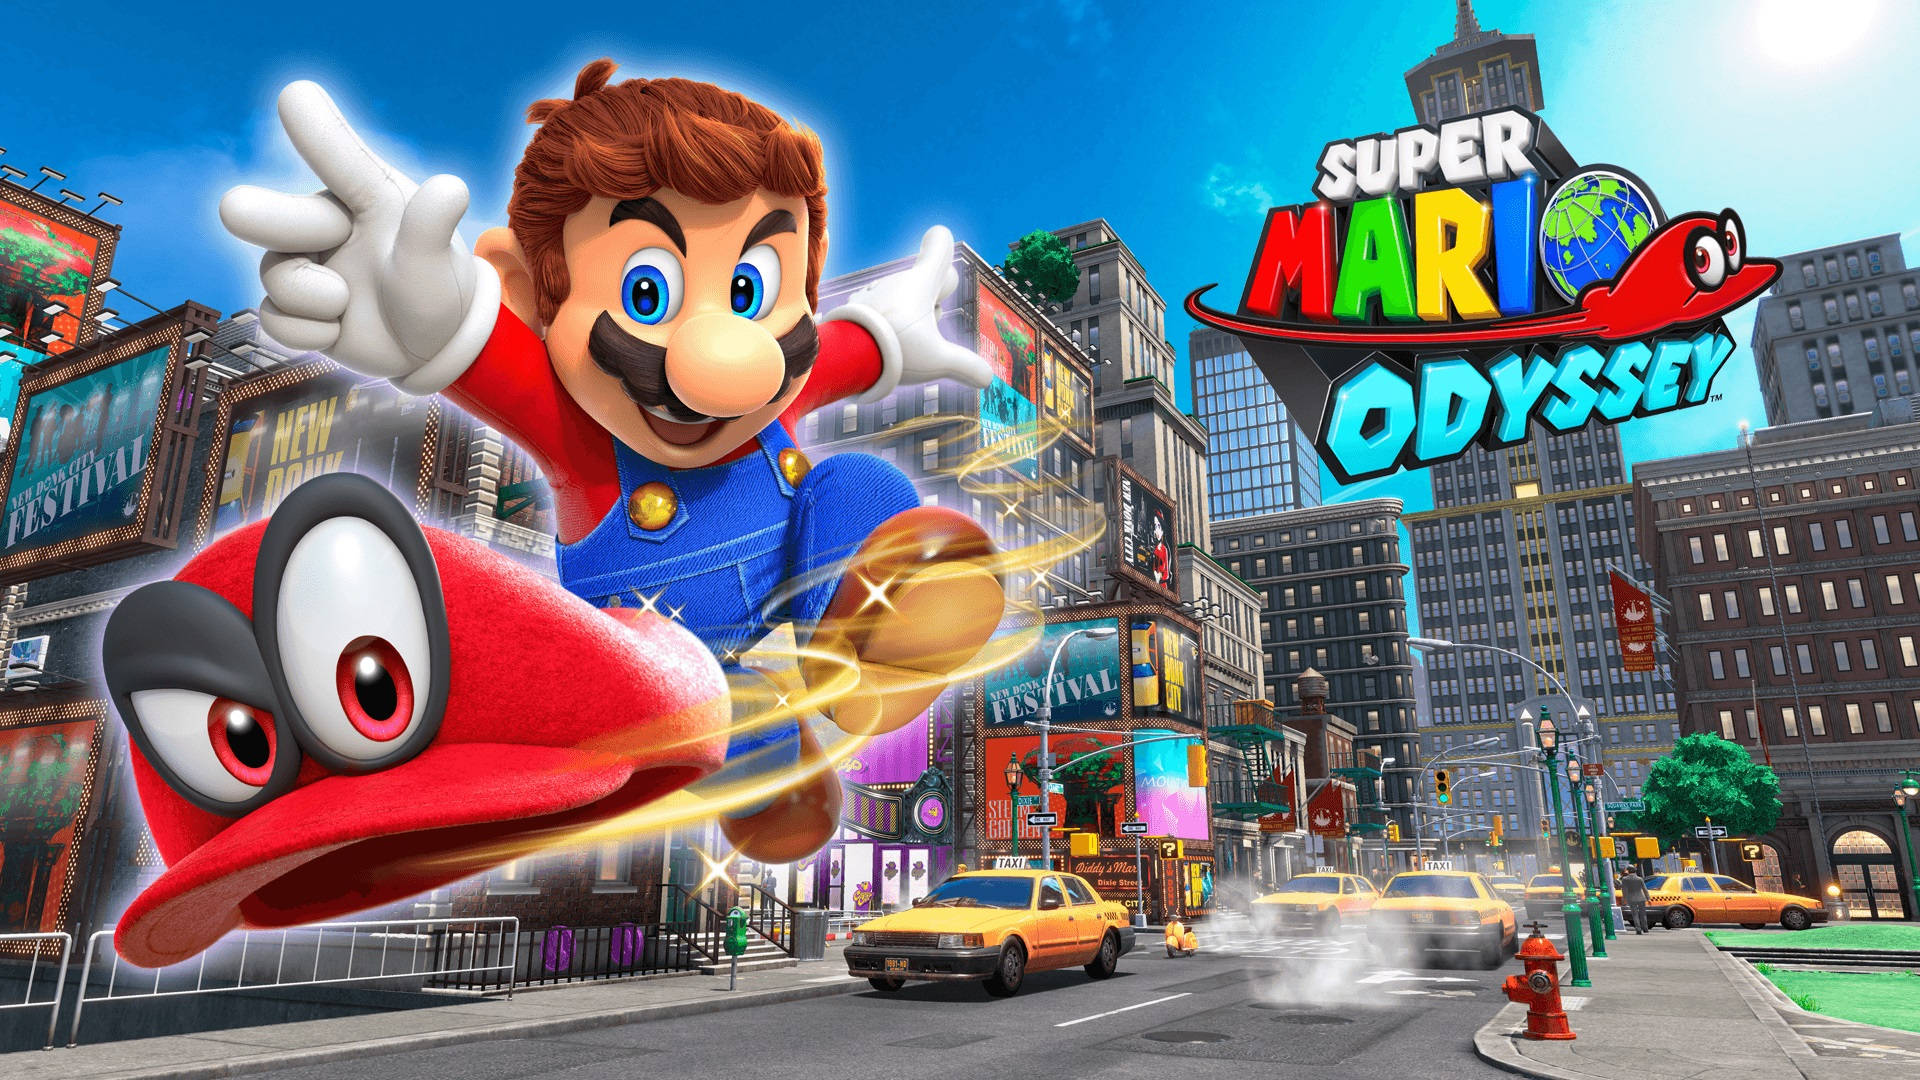 Fondos De Super Mario Odyssey